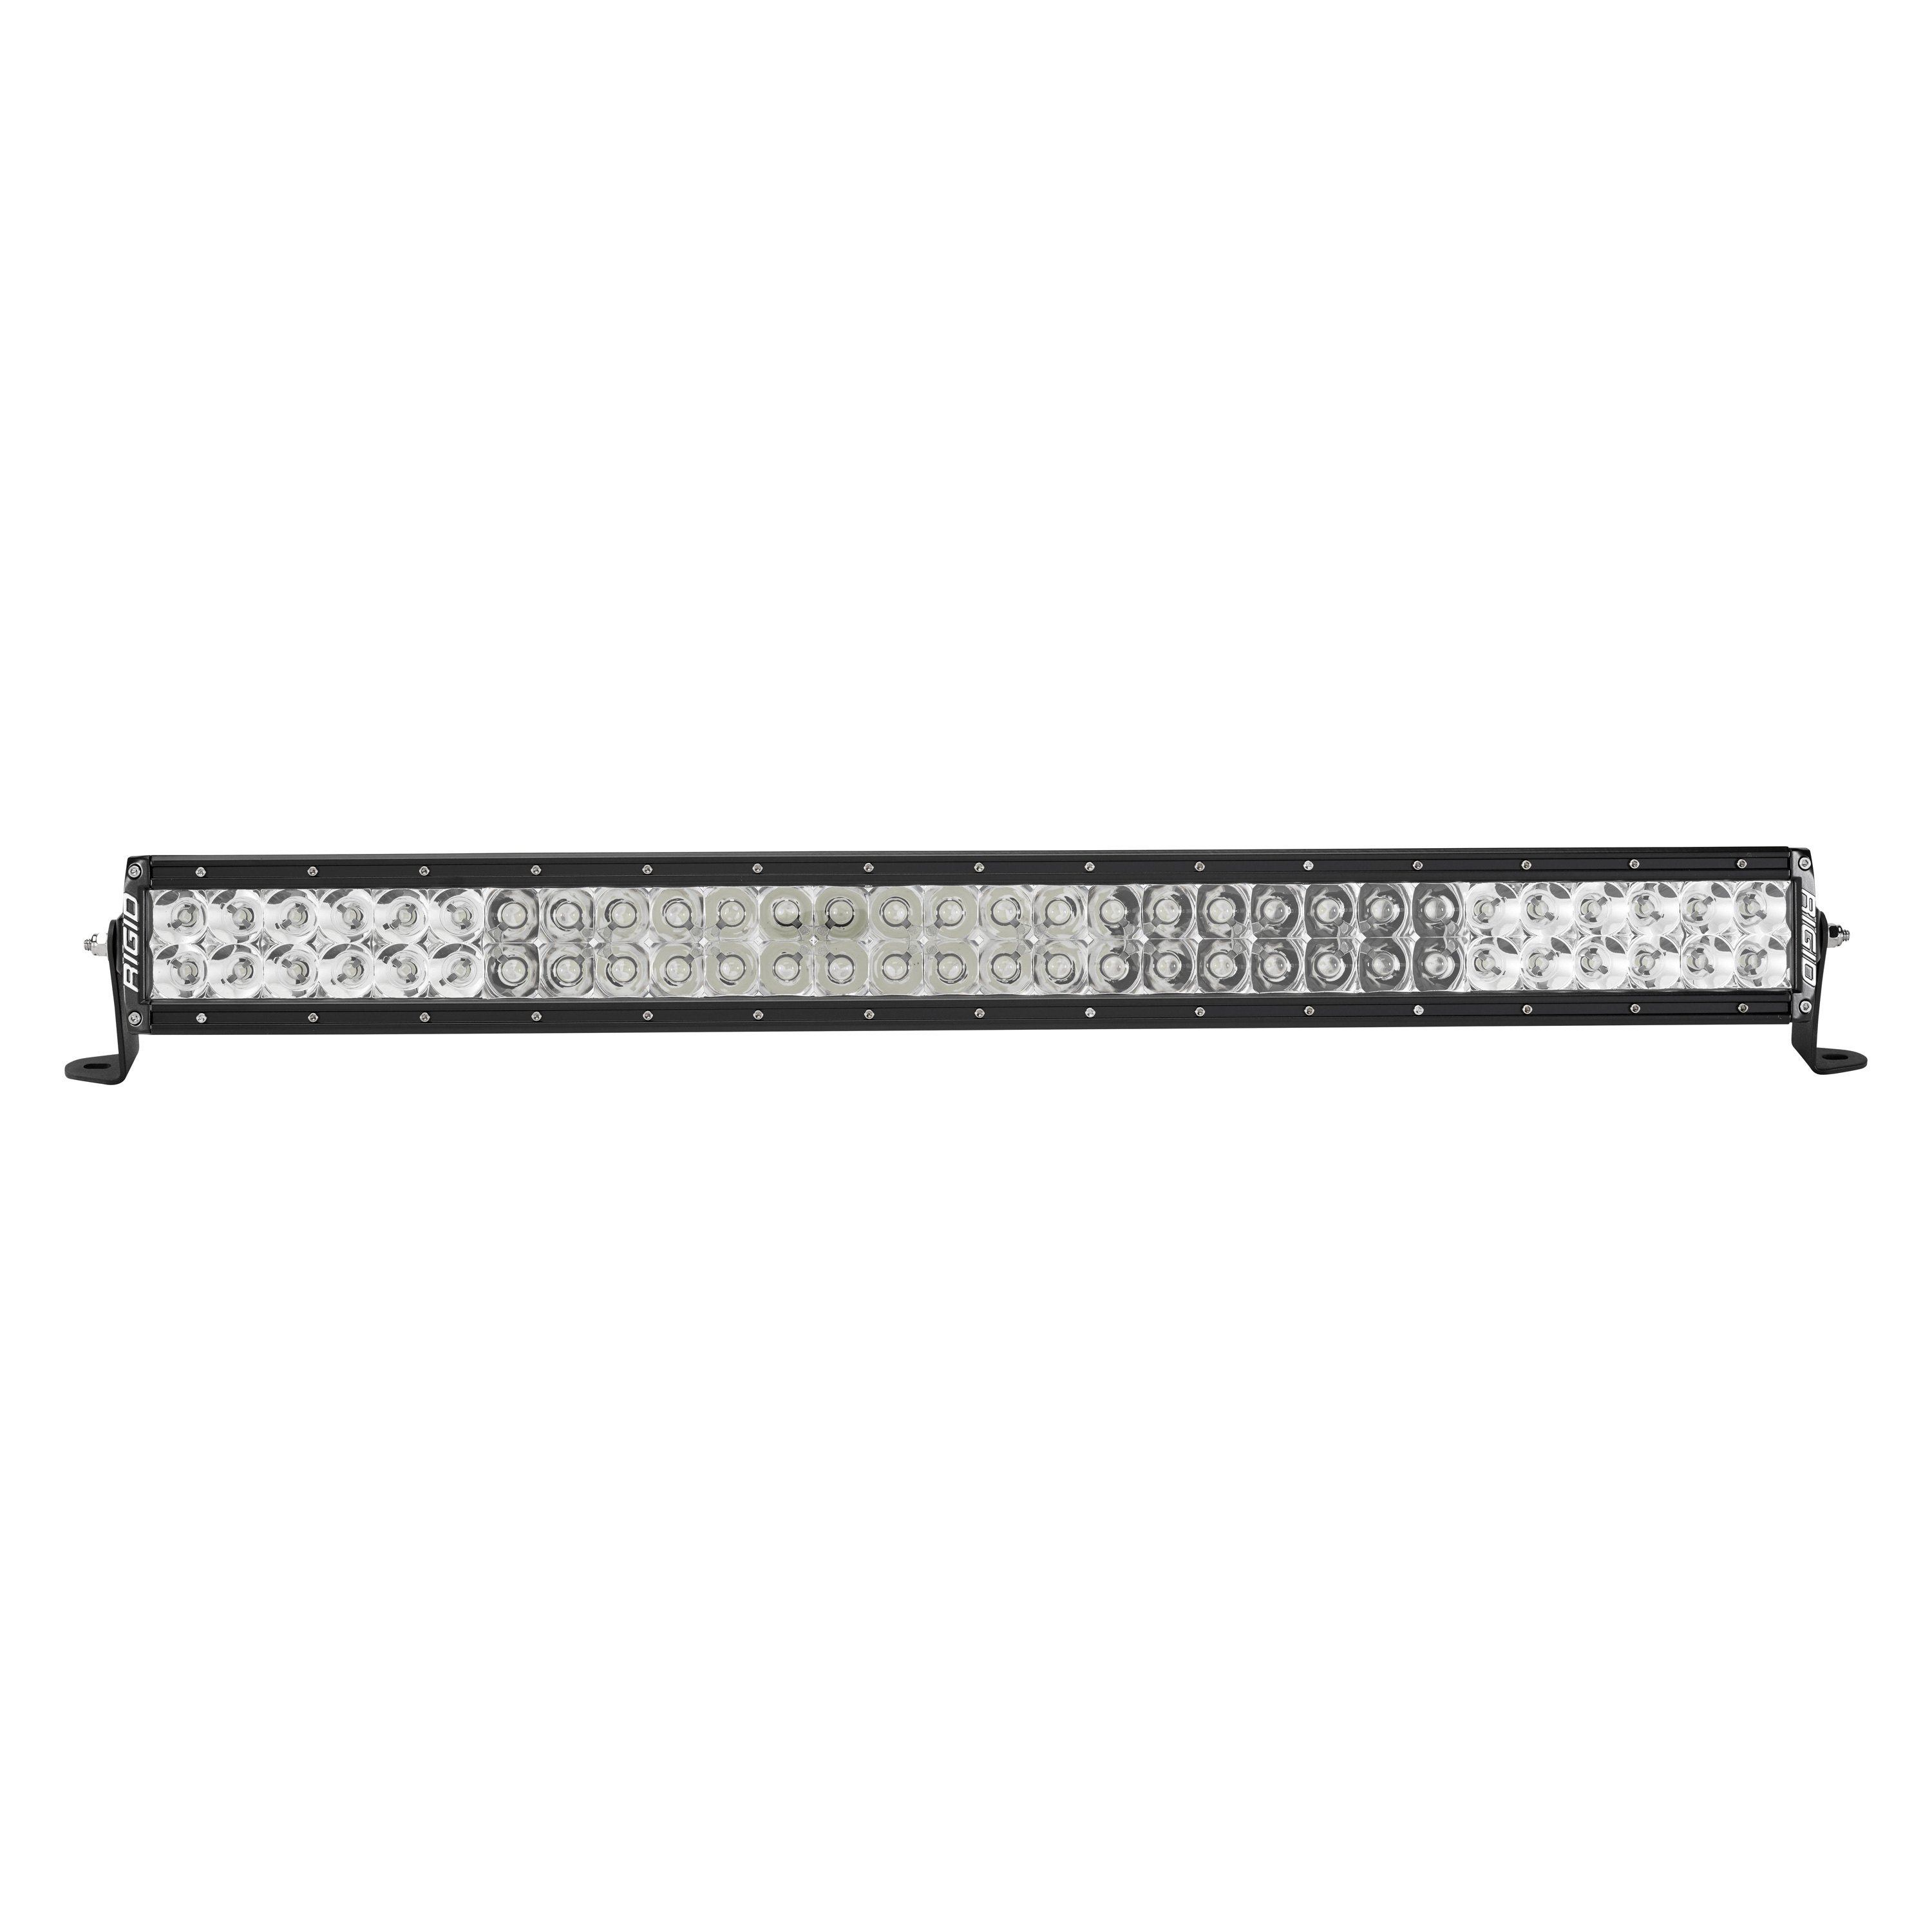 RIGID INDUSTRIES LED Light Bar, E-Series PRO, Double Row, Flood/Spot Beam, 165 Watts, 30" Long, White LED, Aluminum, Black Anod